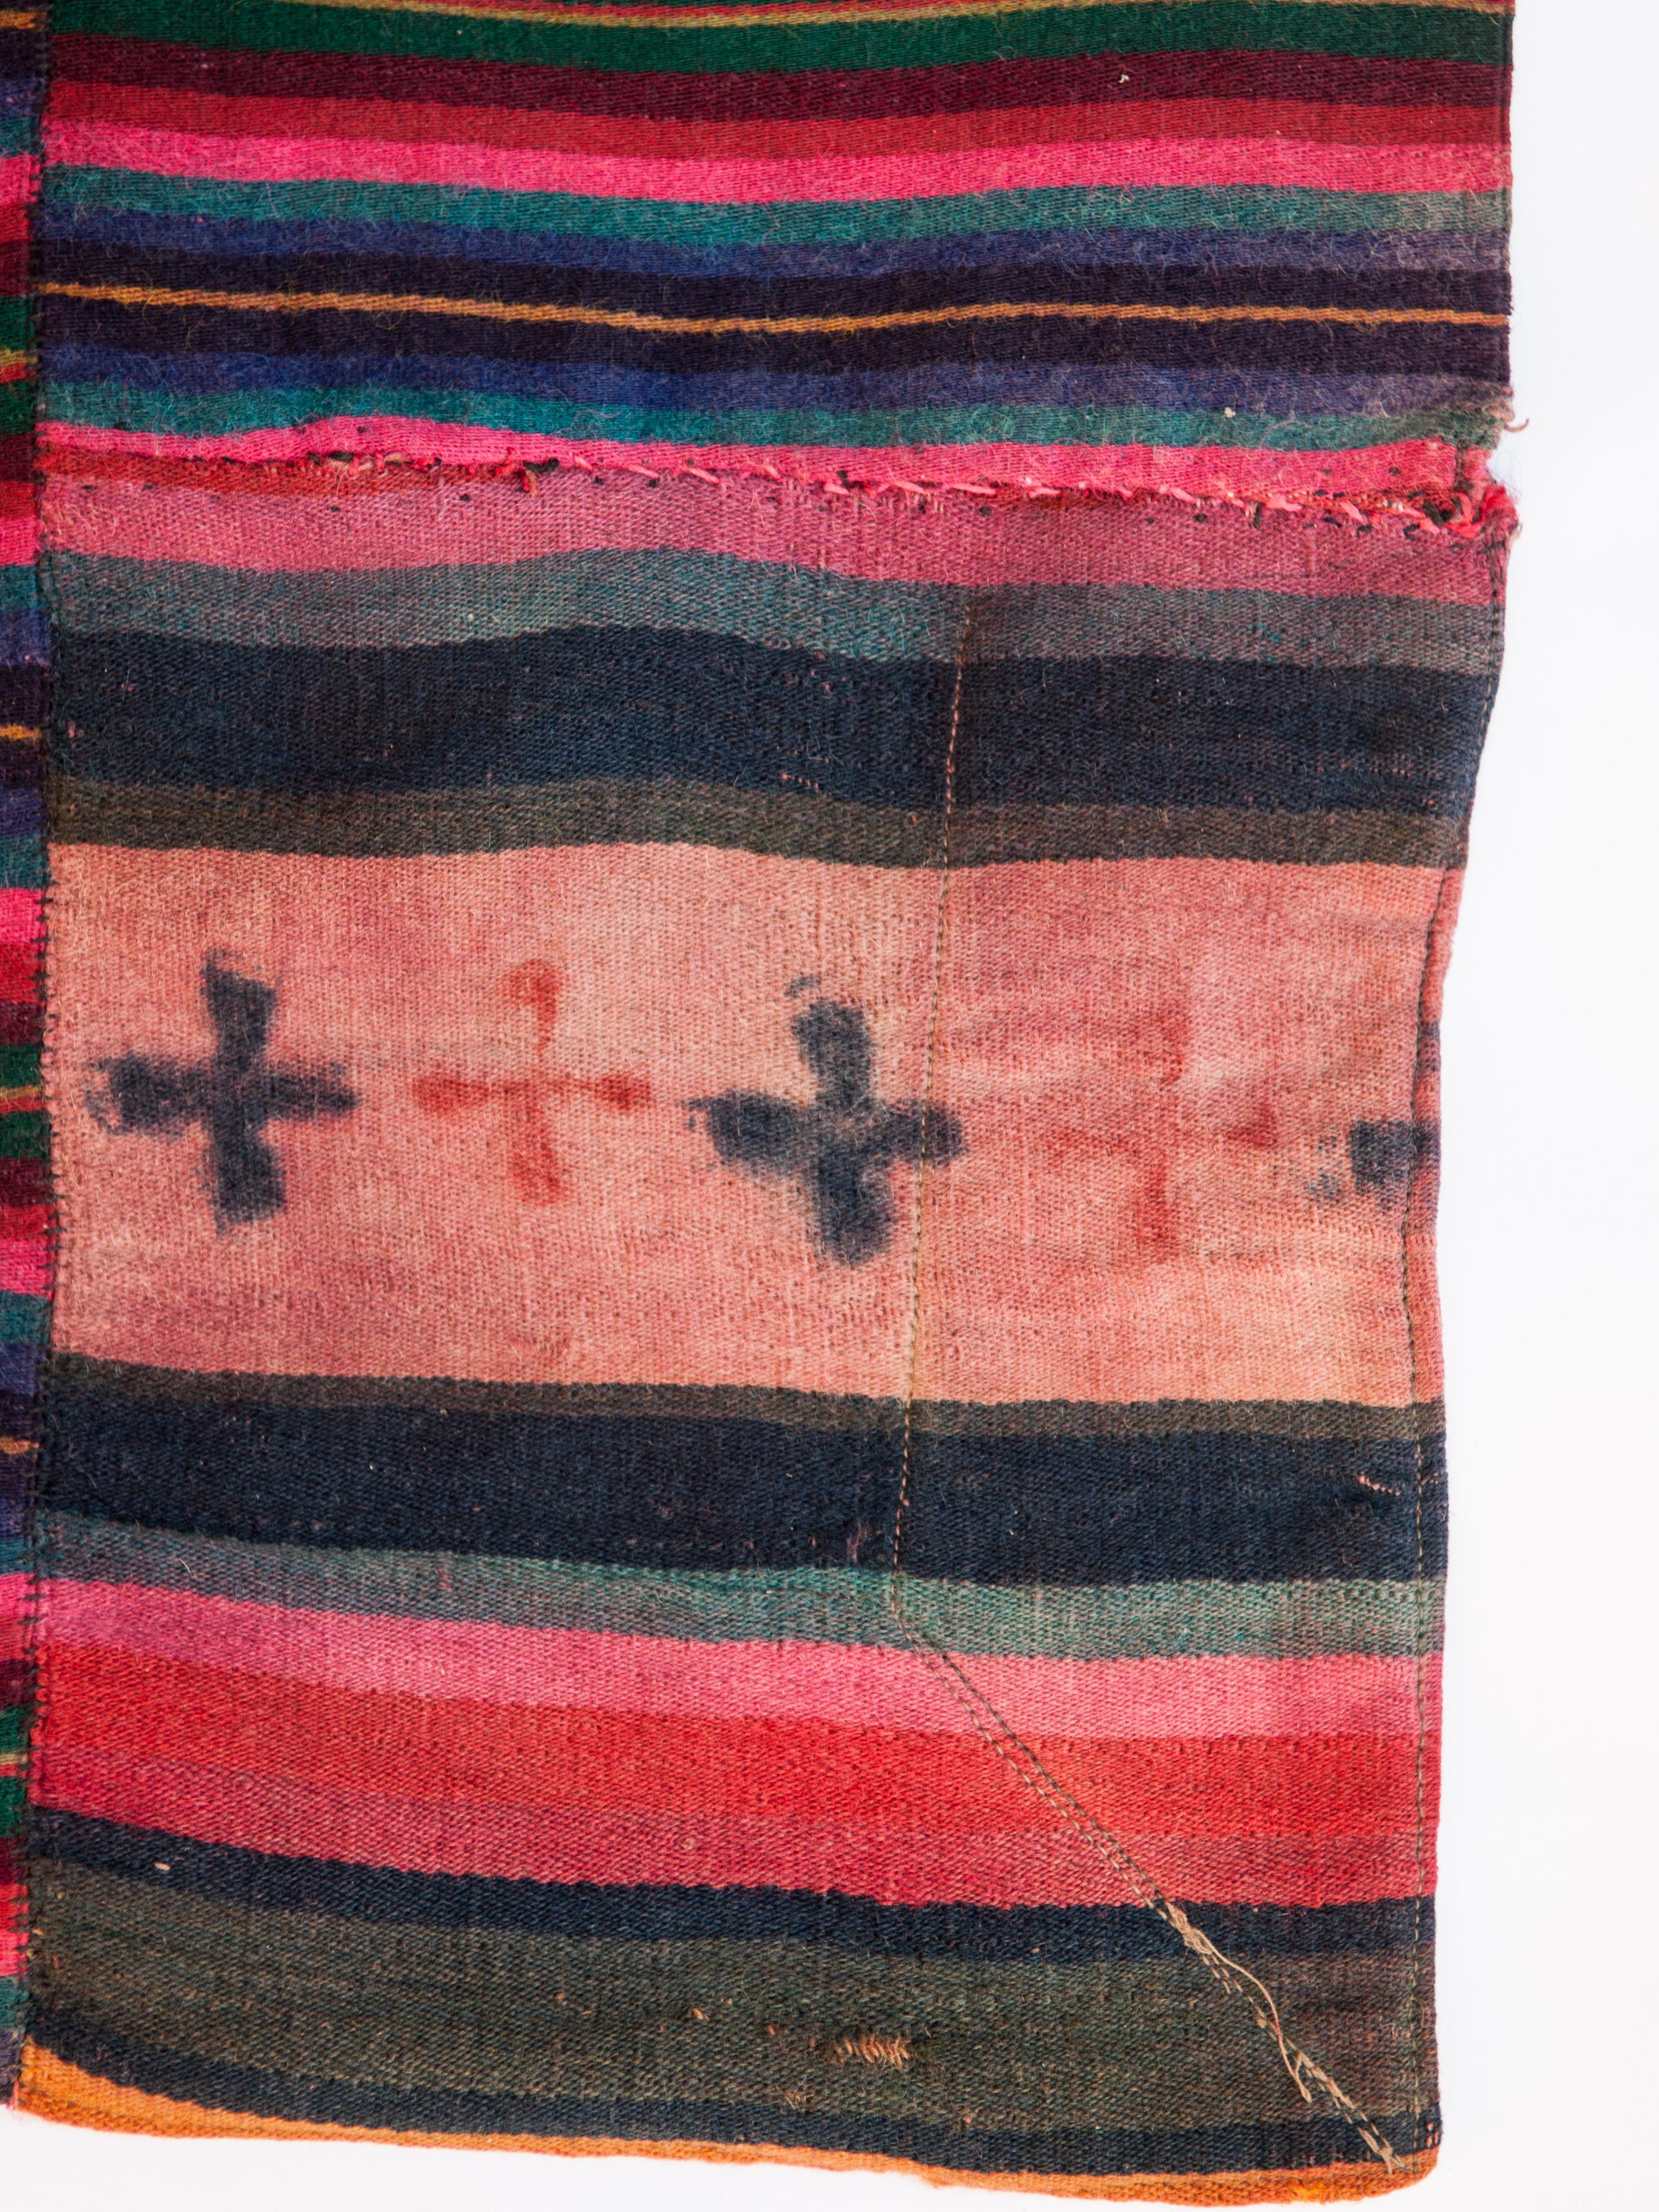 Dyed Vintage Tibetan Style Blanket from Bhutan, Wool, Mid-20th Century